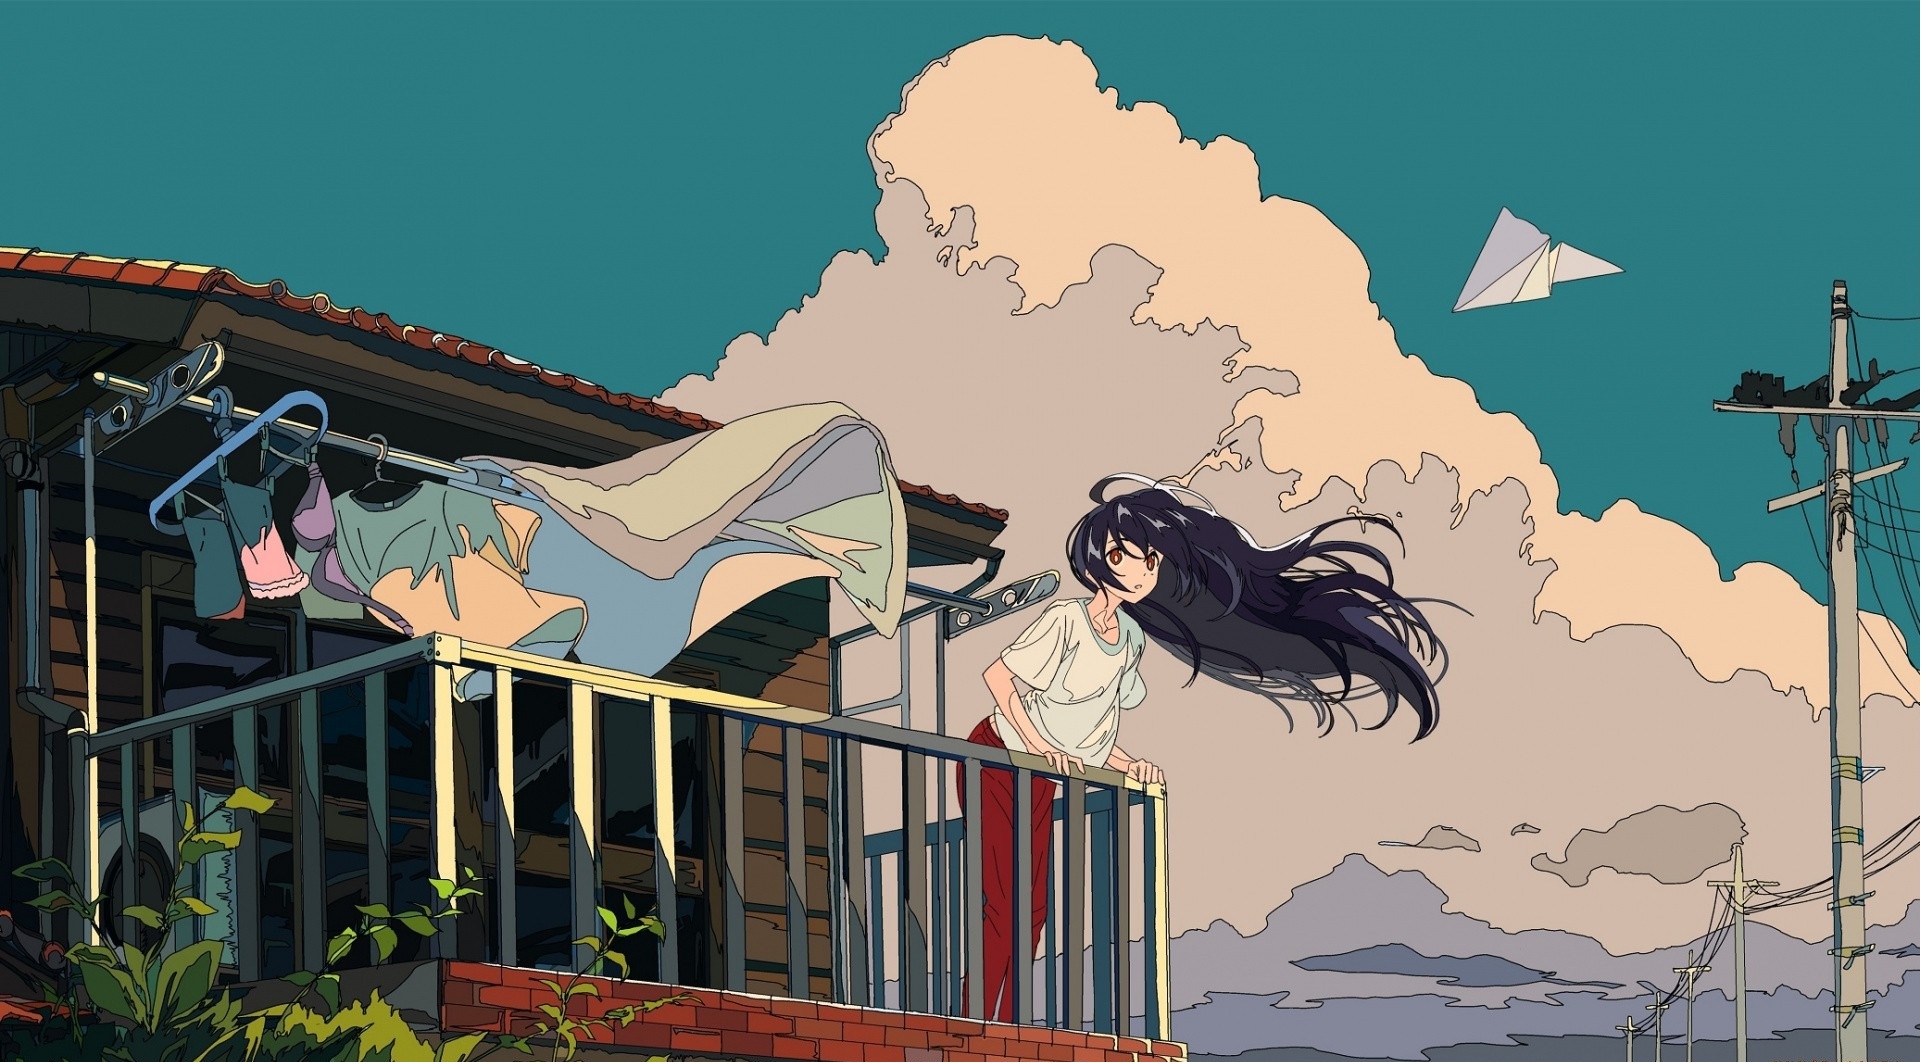 Aesthetic Anime Wallpaper Images  Free Download on Freepik